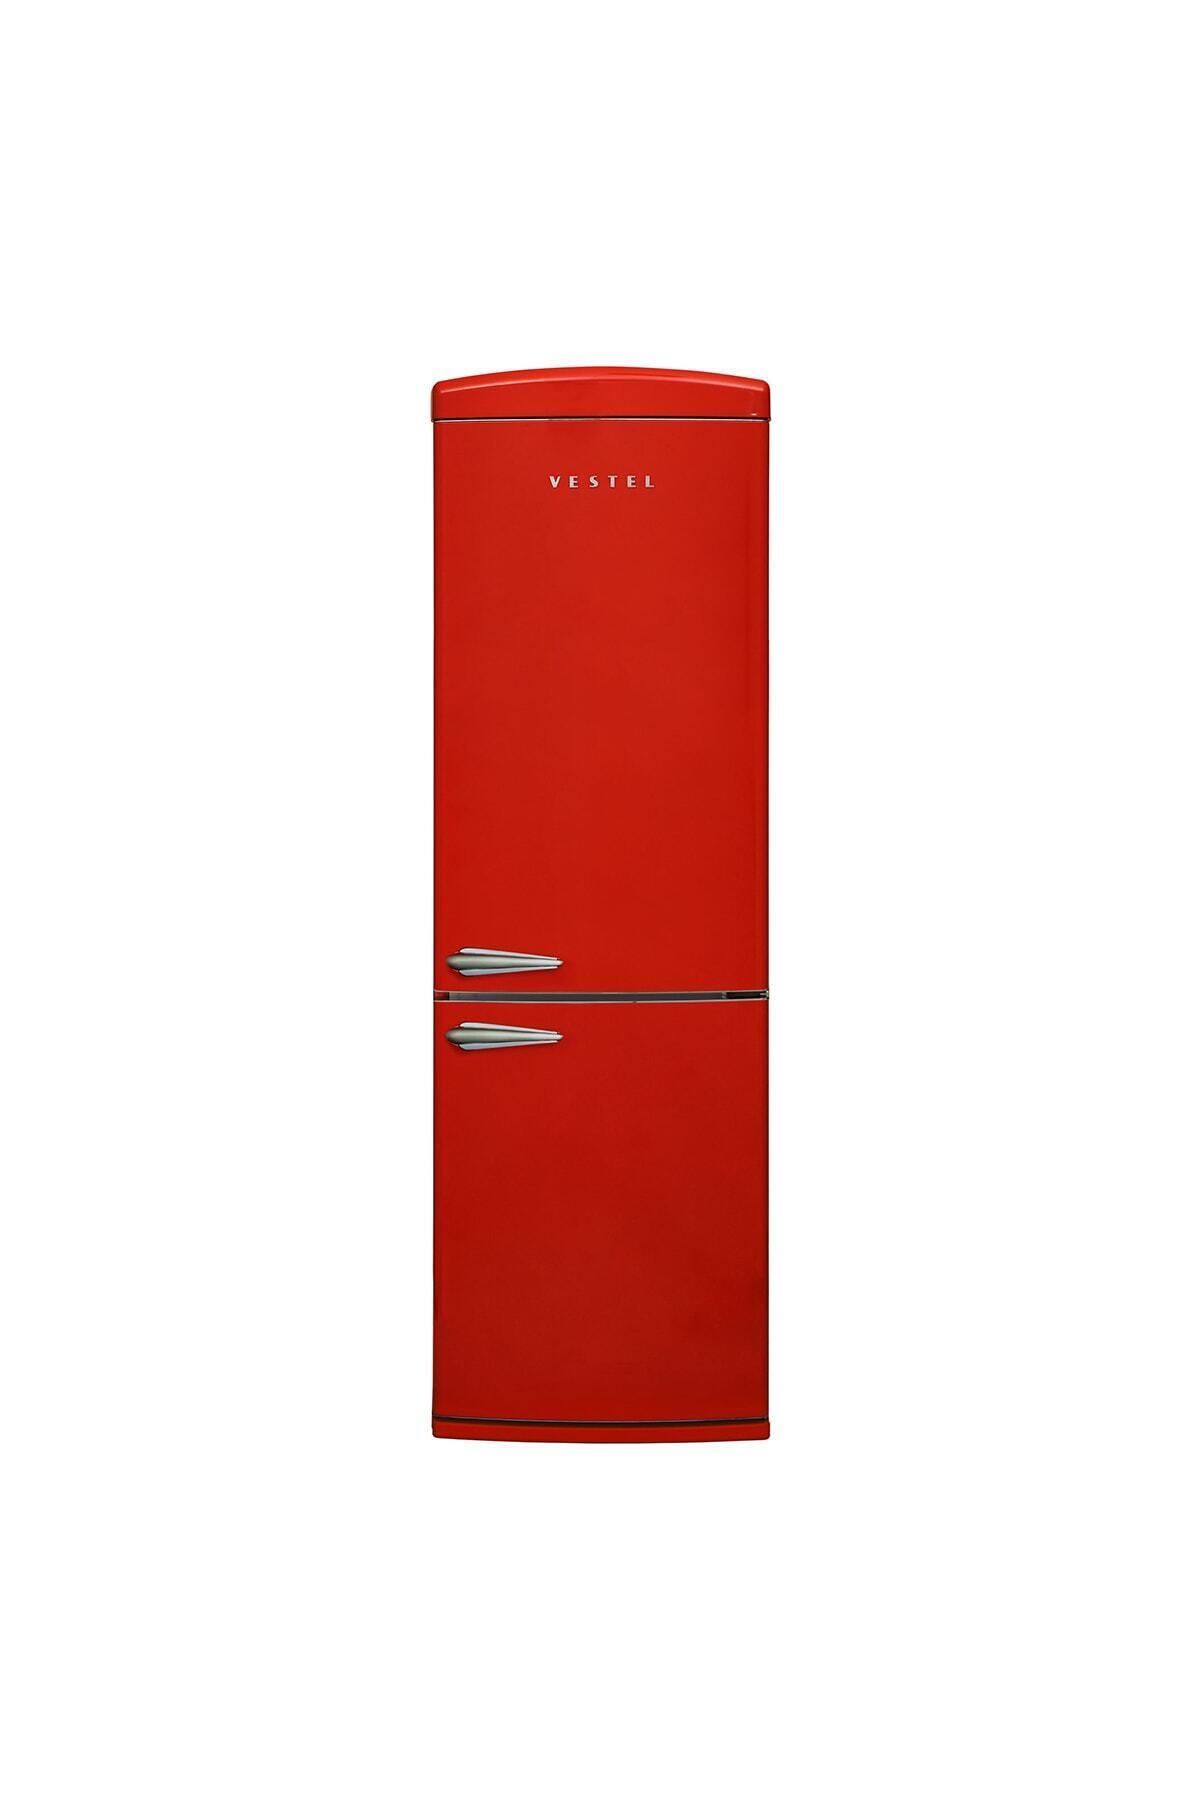 VESTEL Retro NFK37201 Buzdolabı Kırmızı